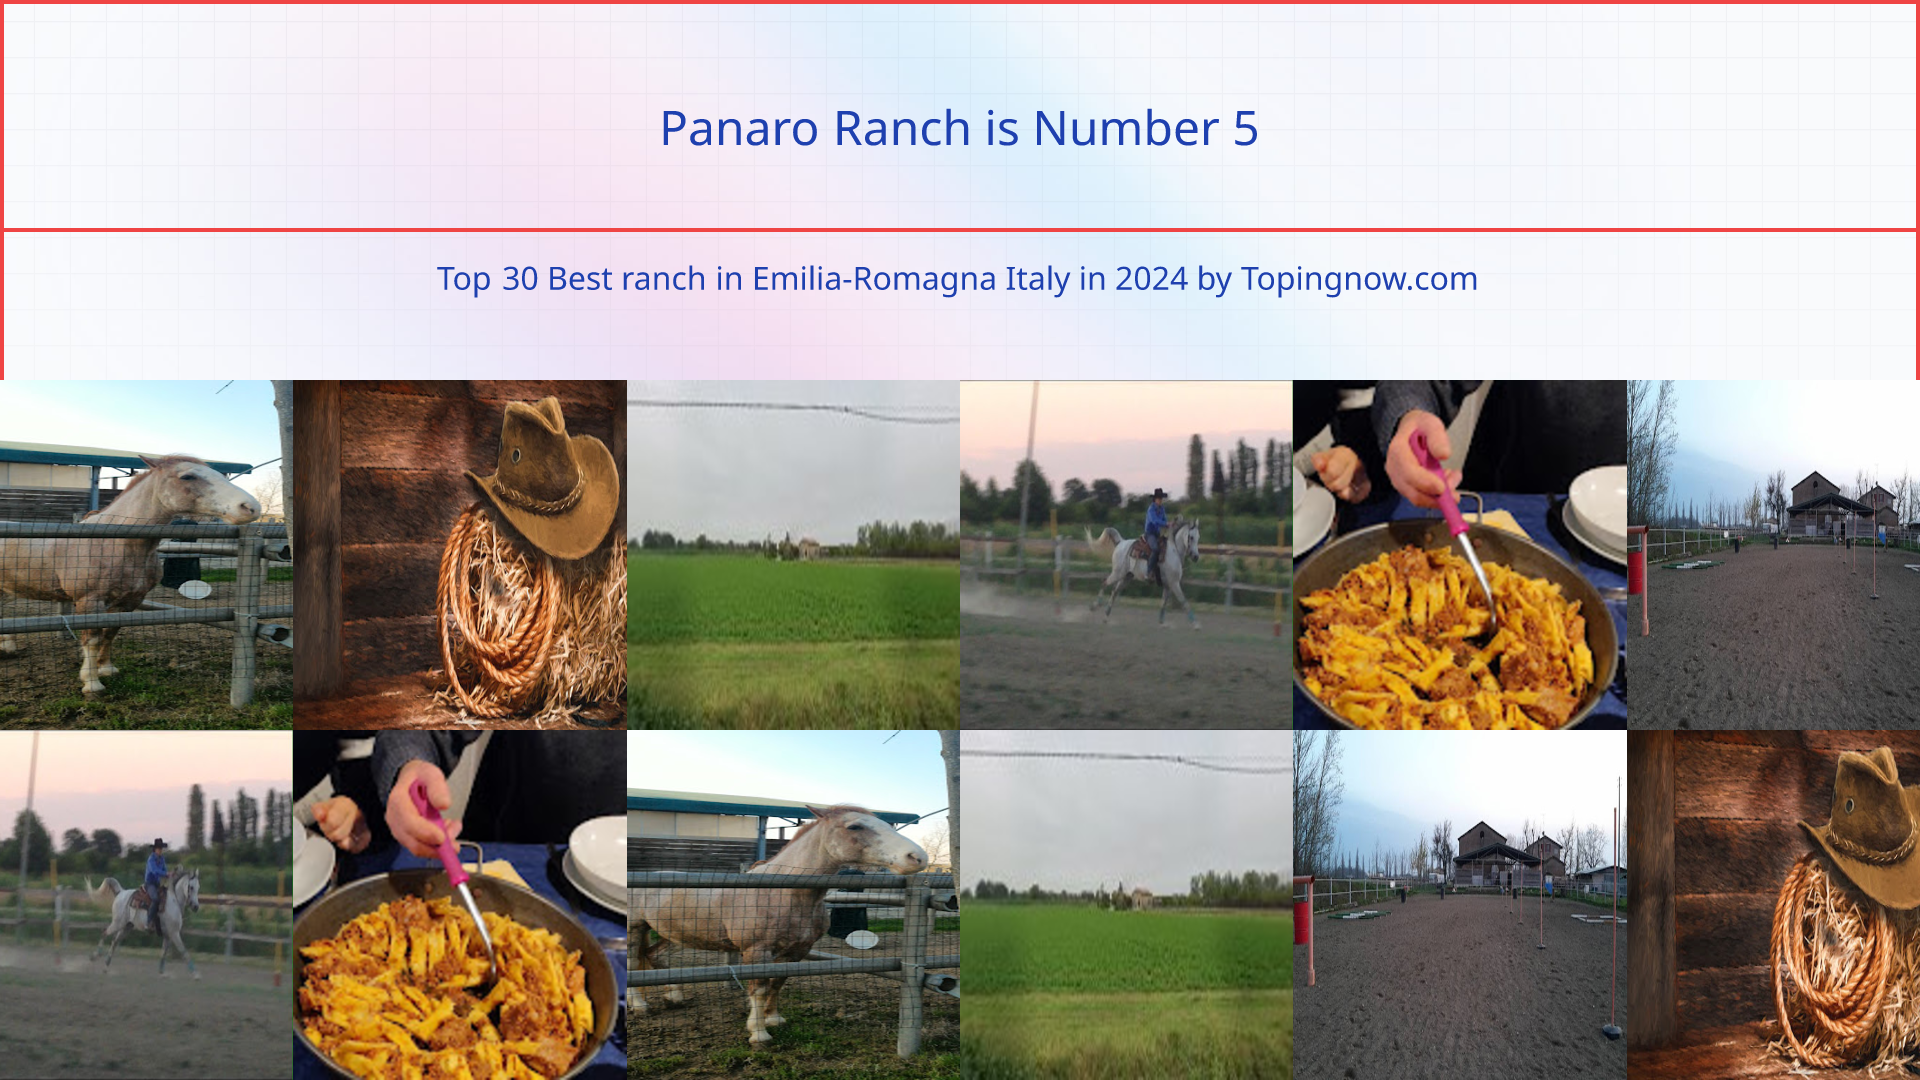 Panaro Ranch: Top 30 Best ranch in Emilia-Romagna Italy in 2024